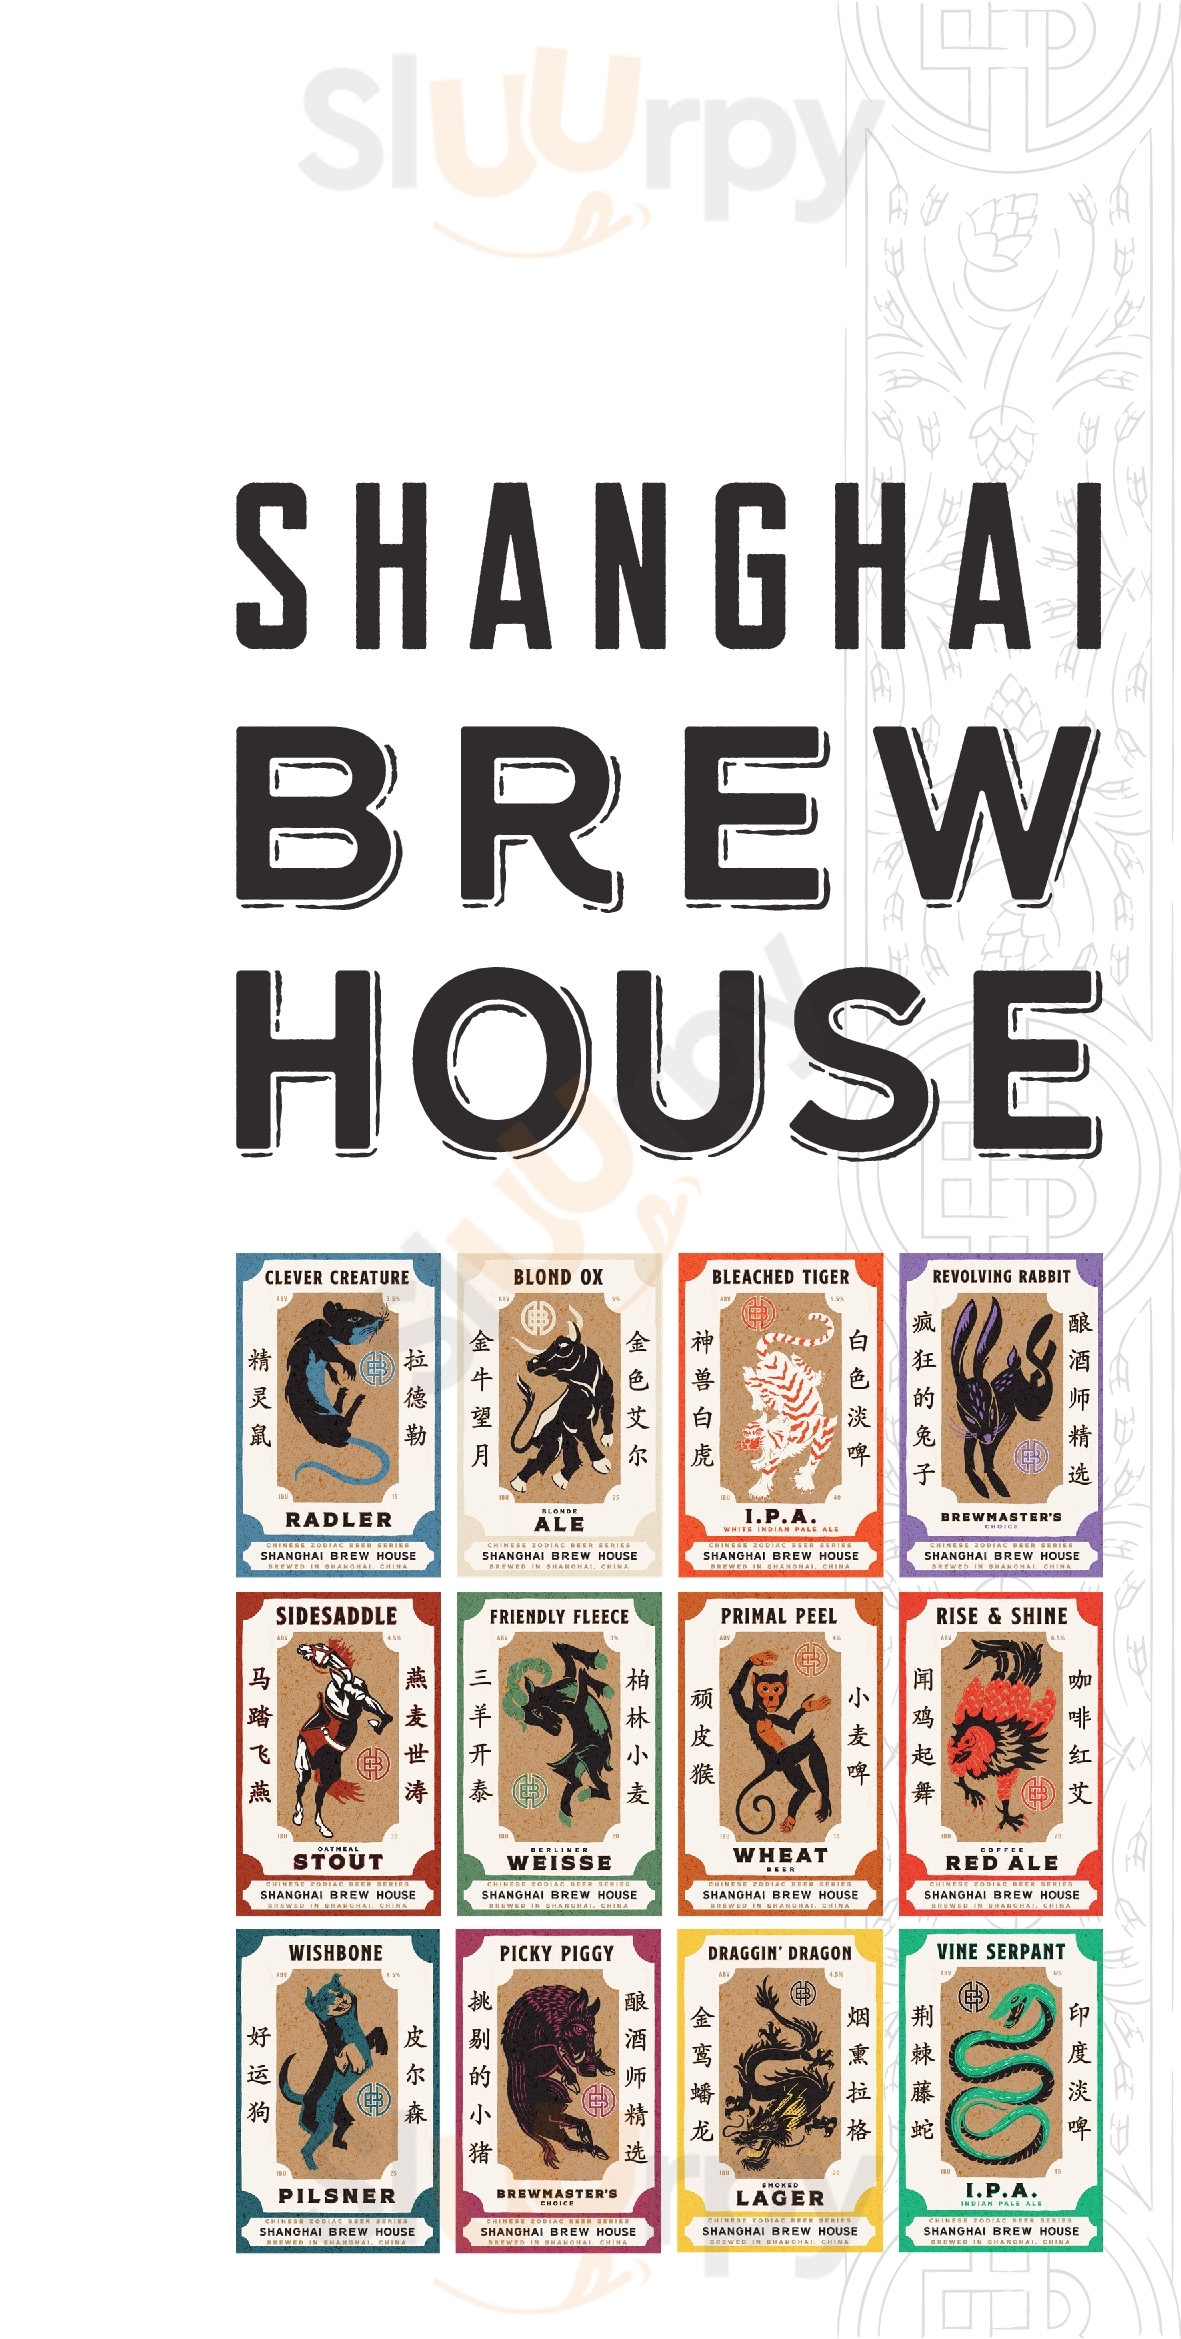 Shanghai Brew House(虹梅路店) 上海市 Menu - 1